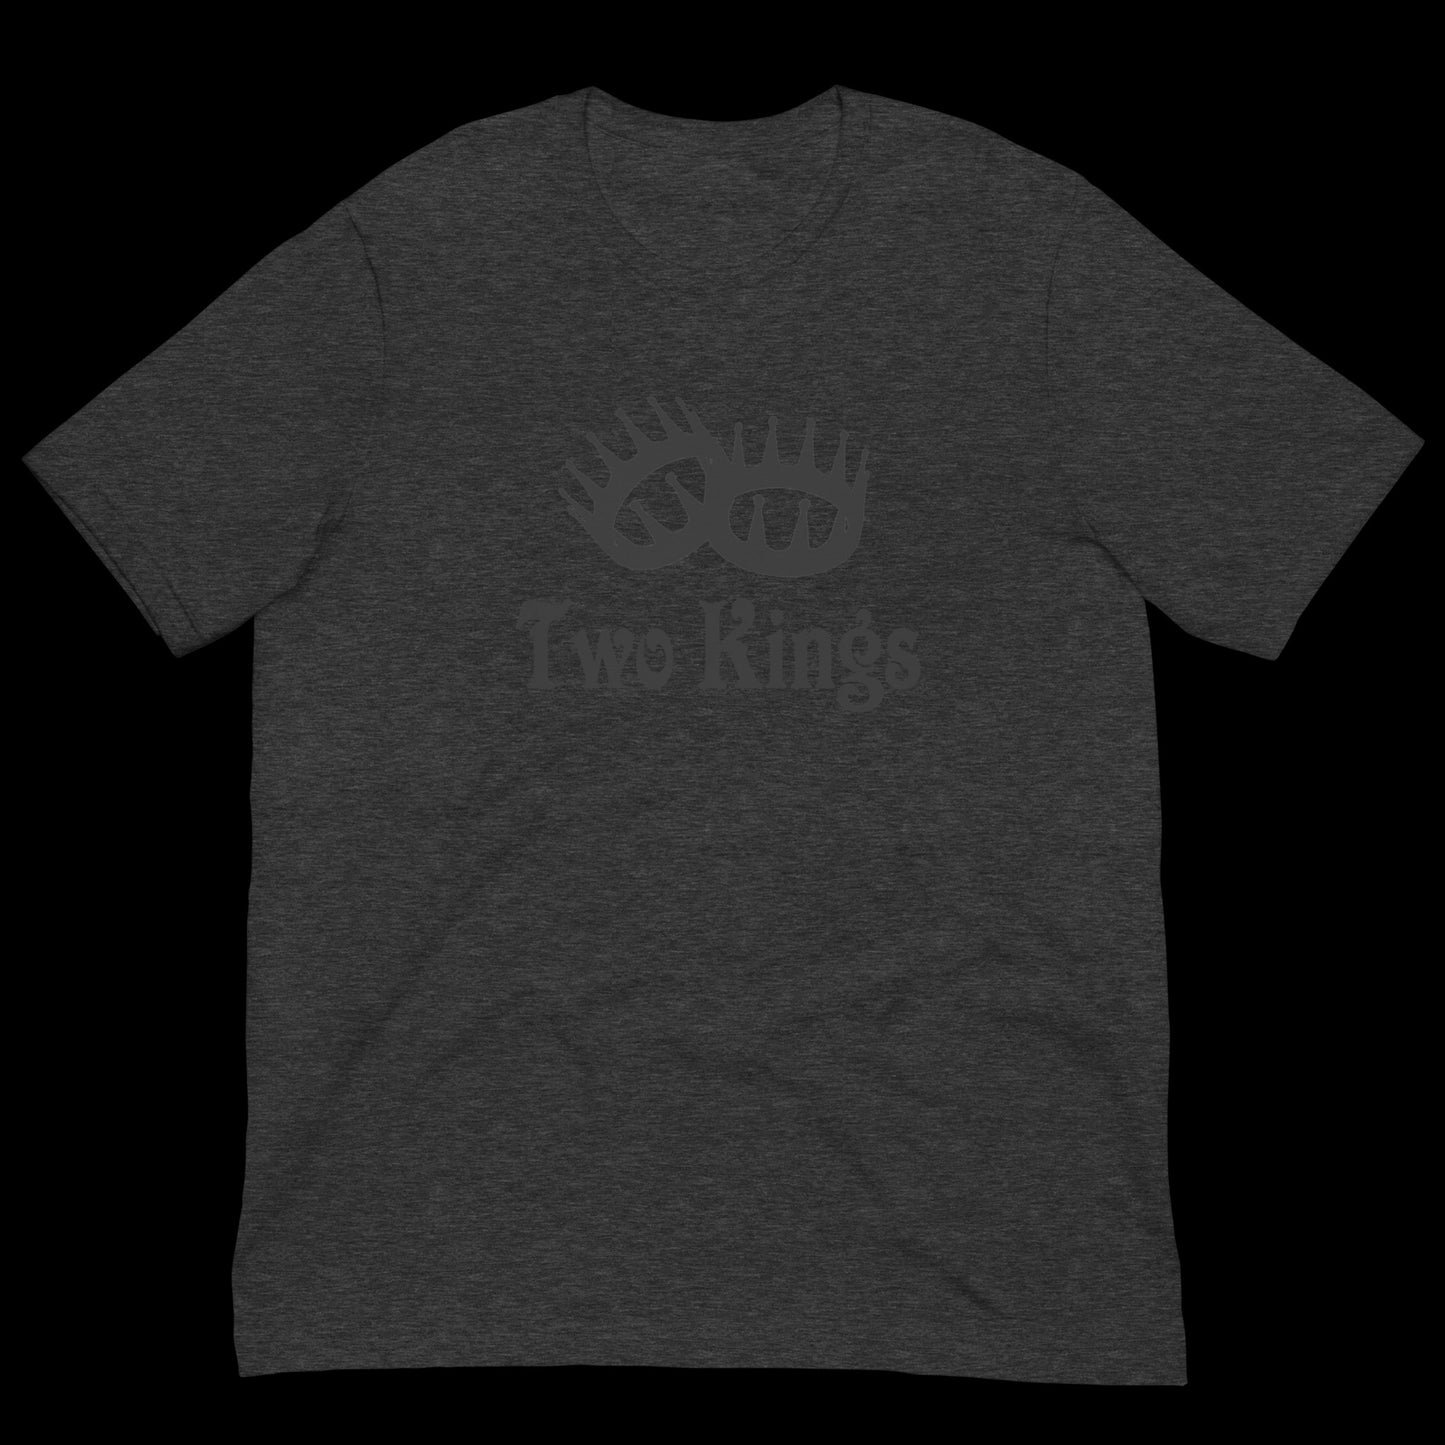 Two Kings Black Logo T-Shirt